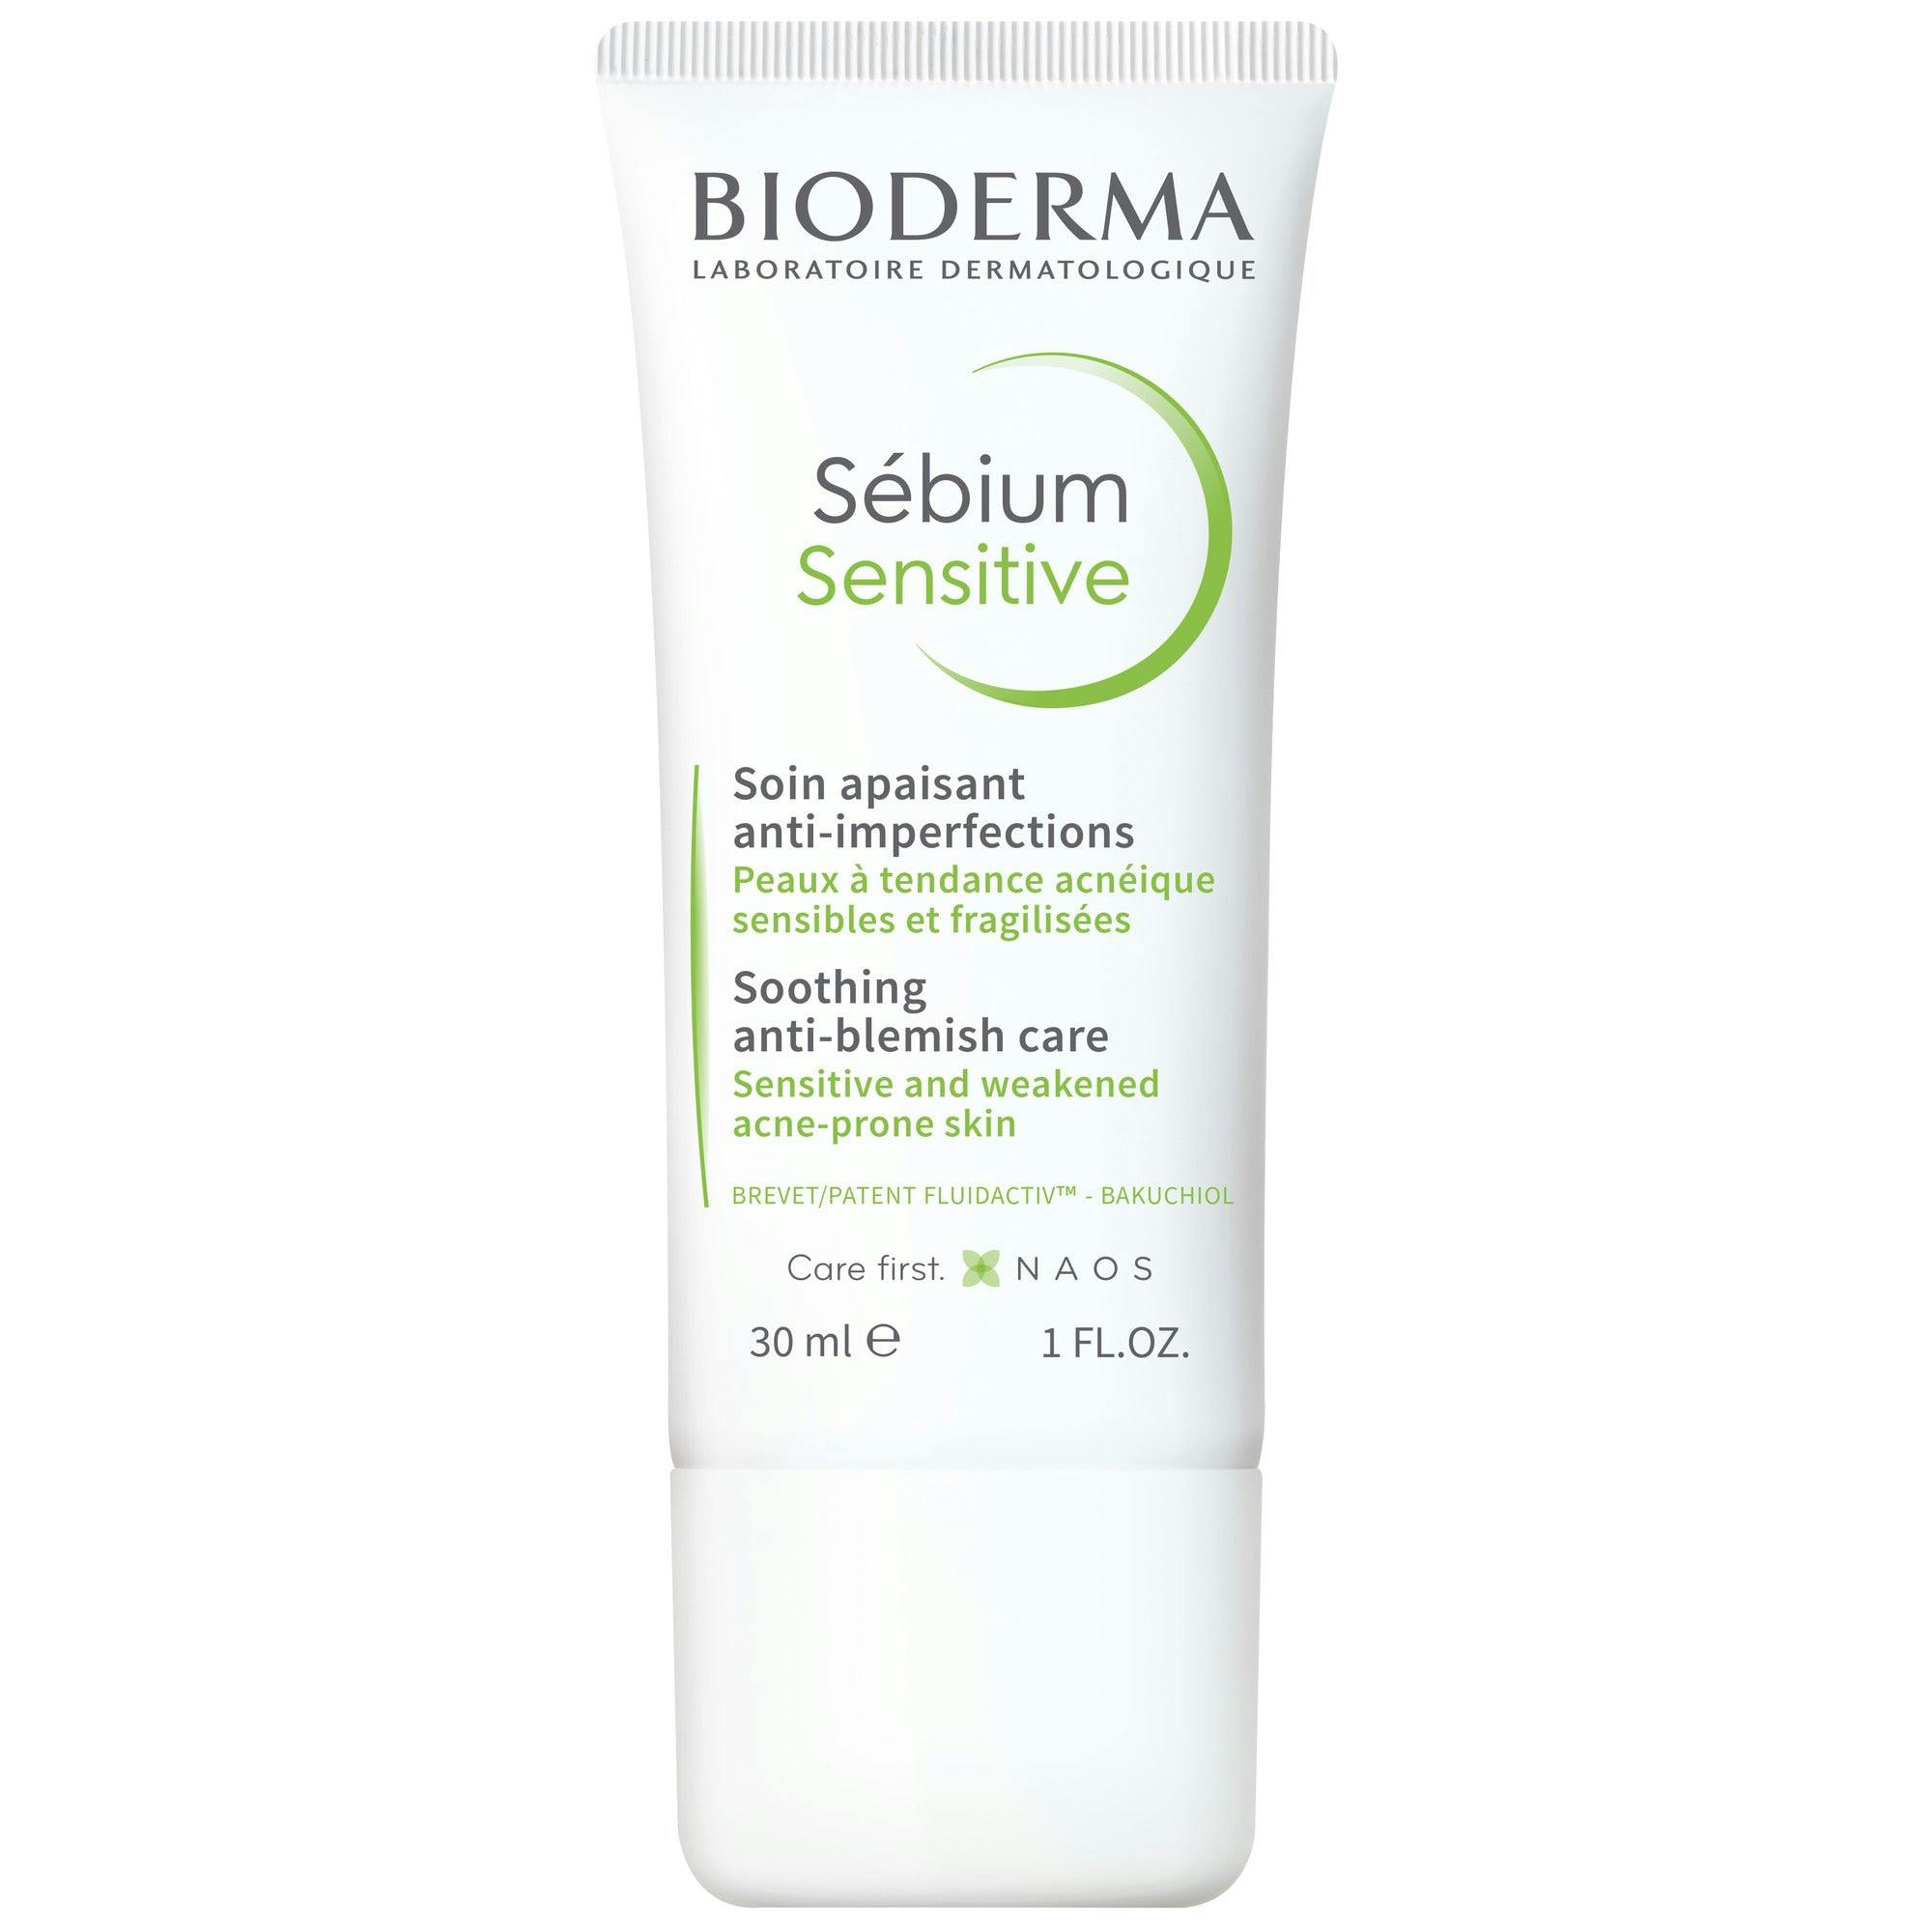 Bioderma Sébium Sensitive Soothing Anti-acne Face Moisturiser suitable for Acne Prone Skin 30ml